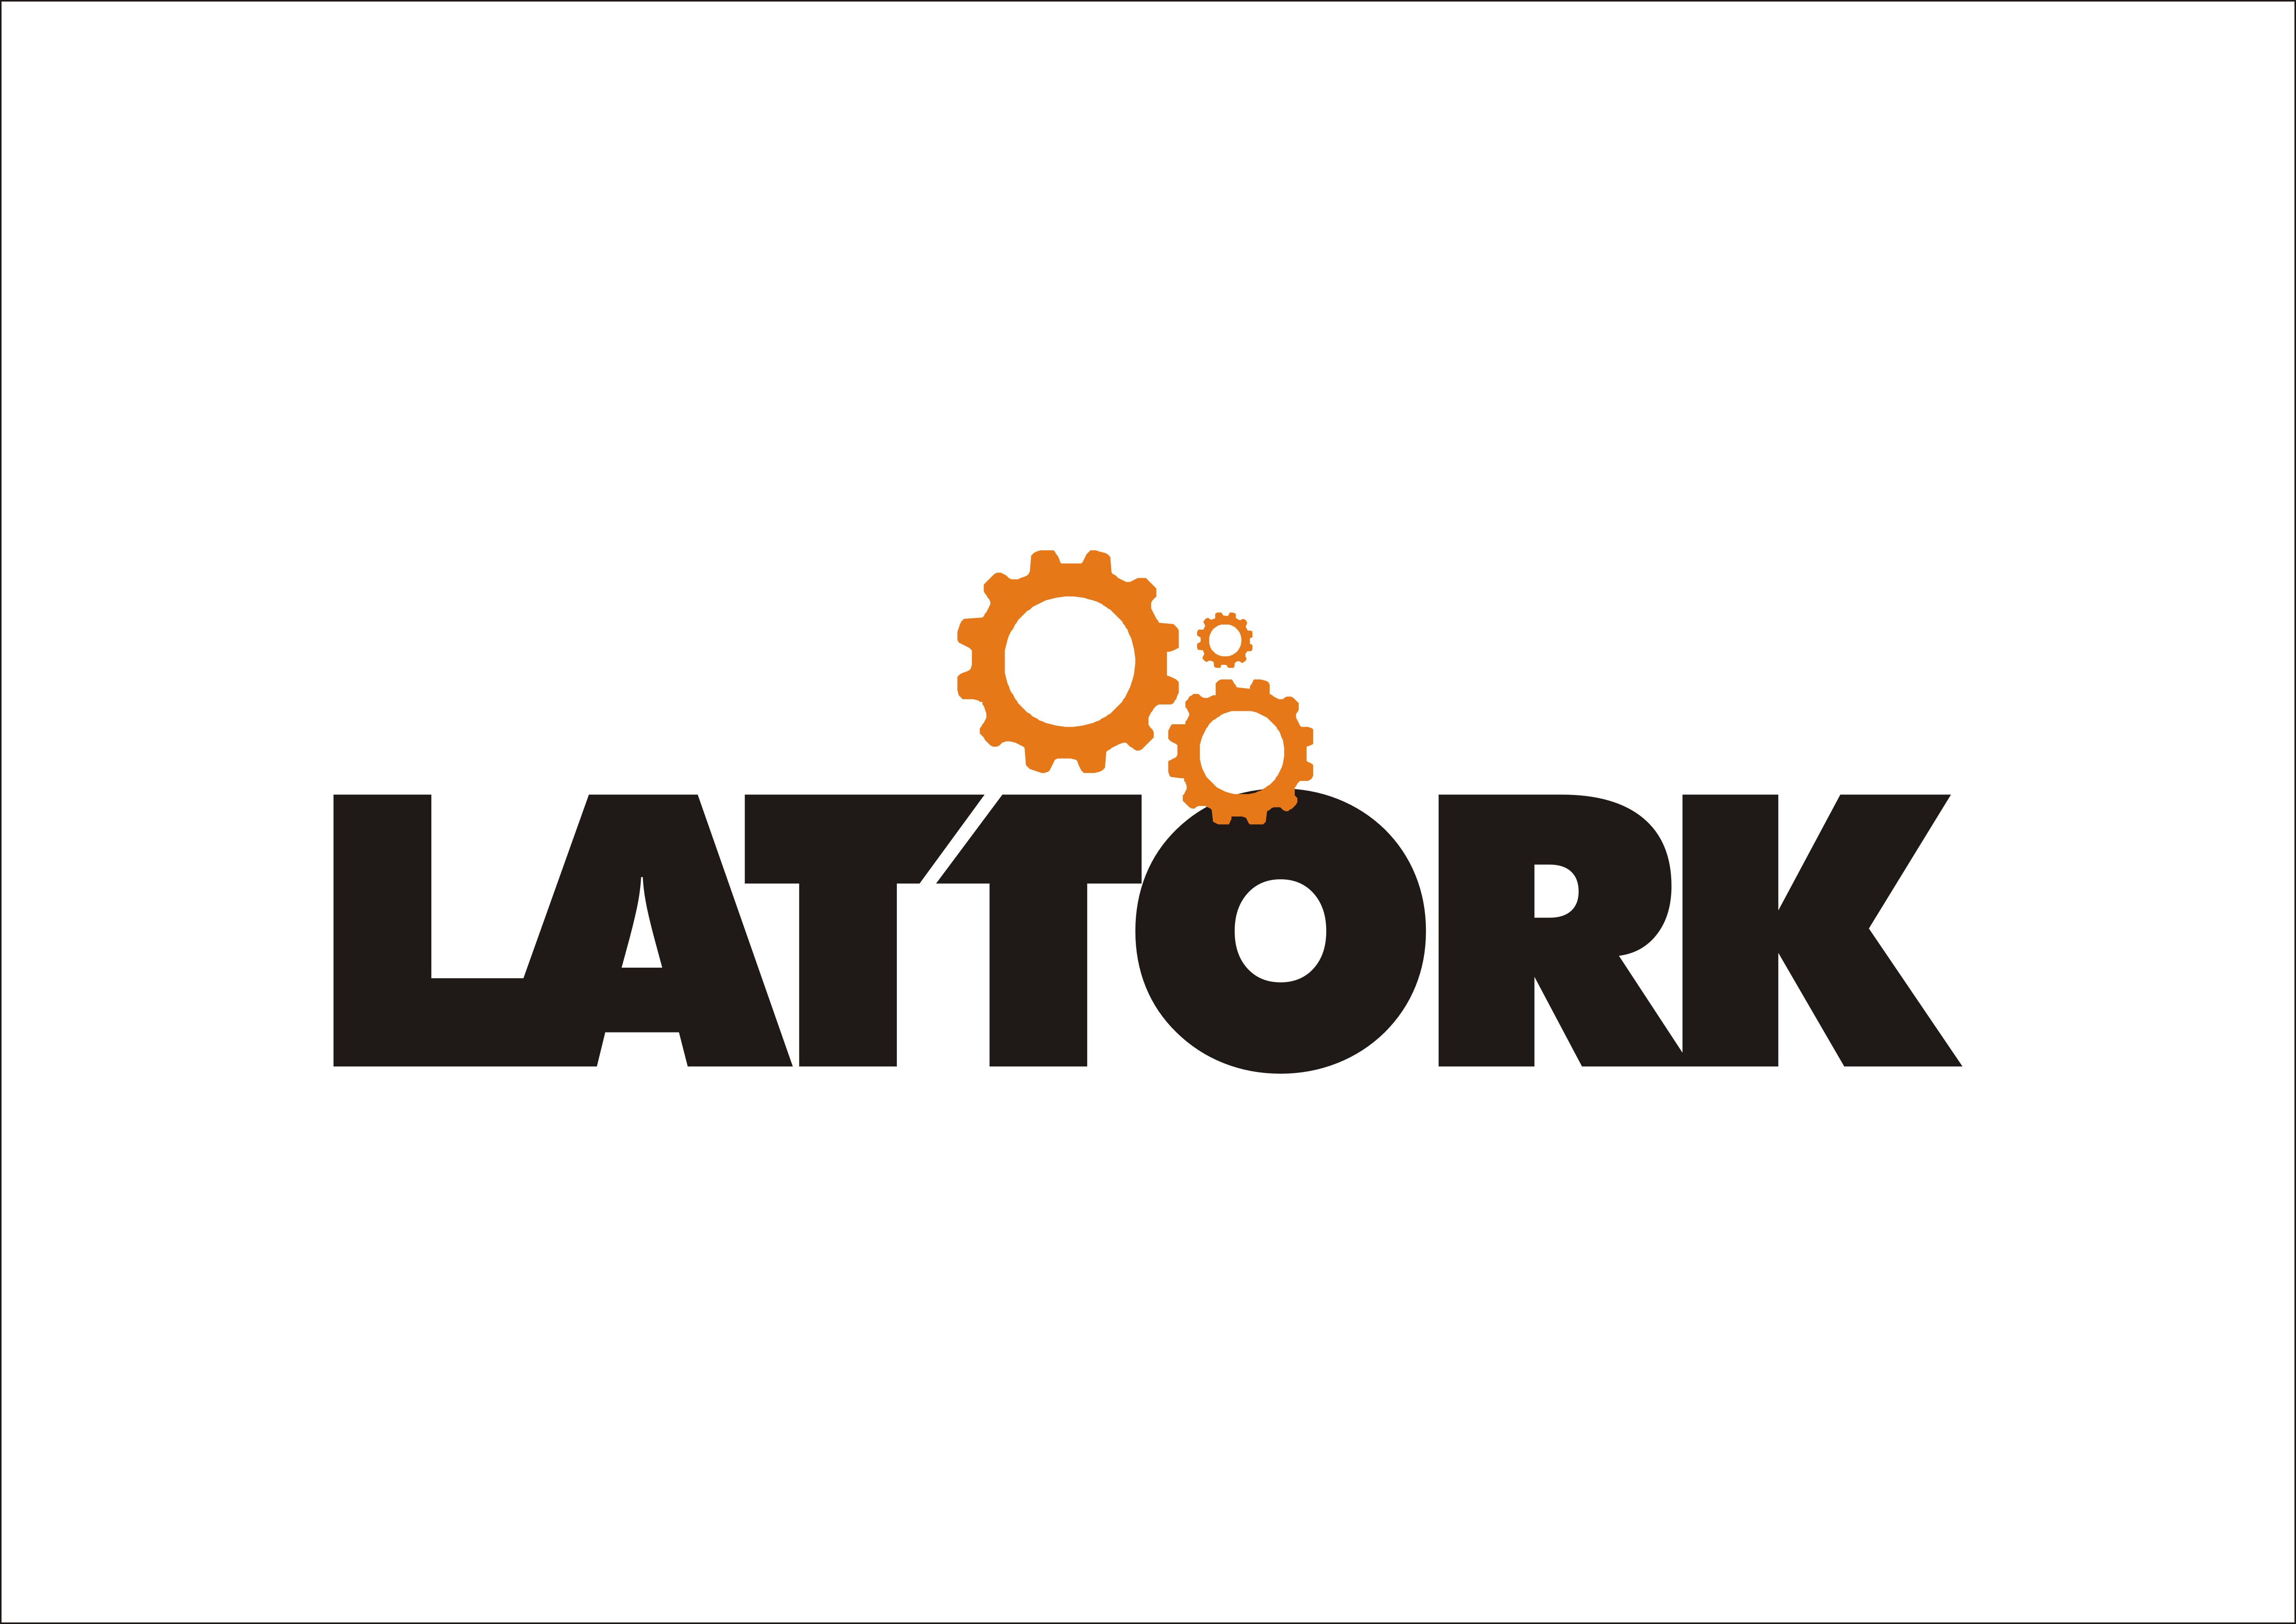 Lattork